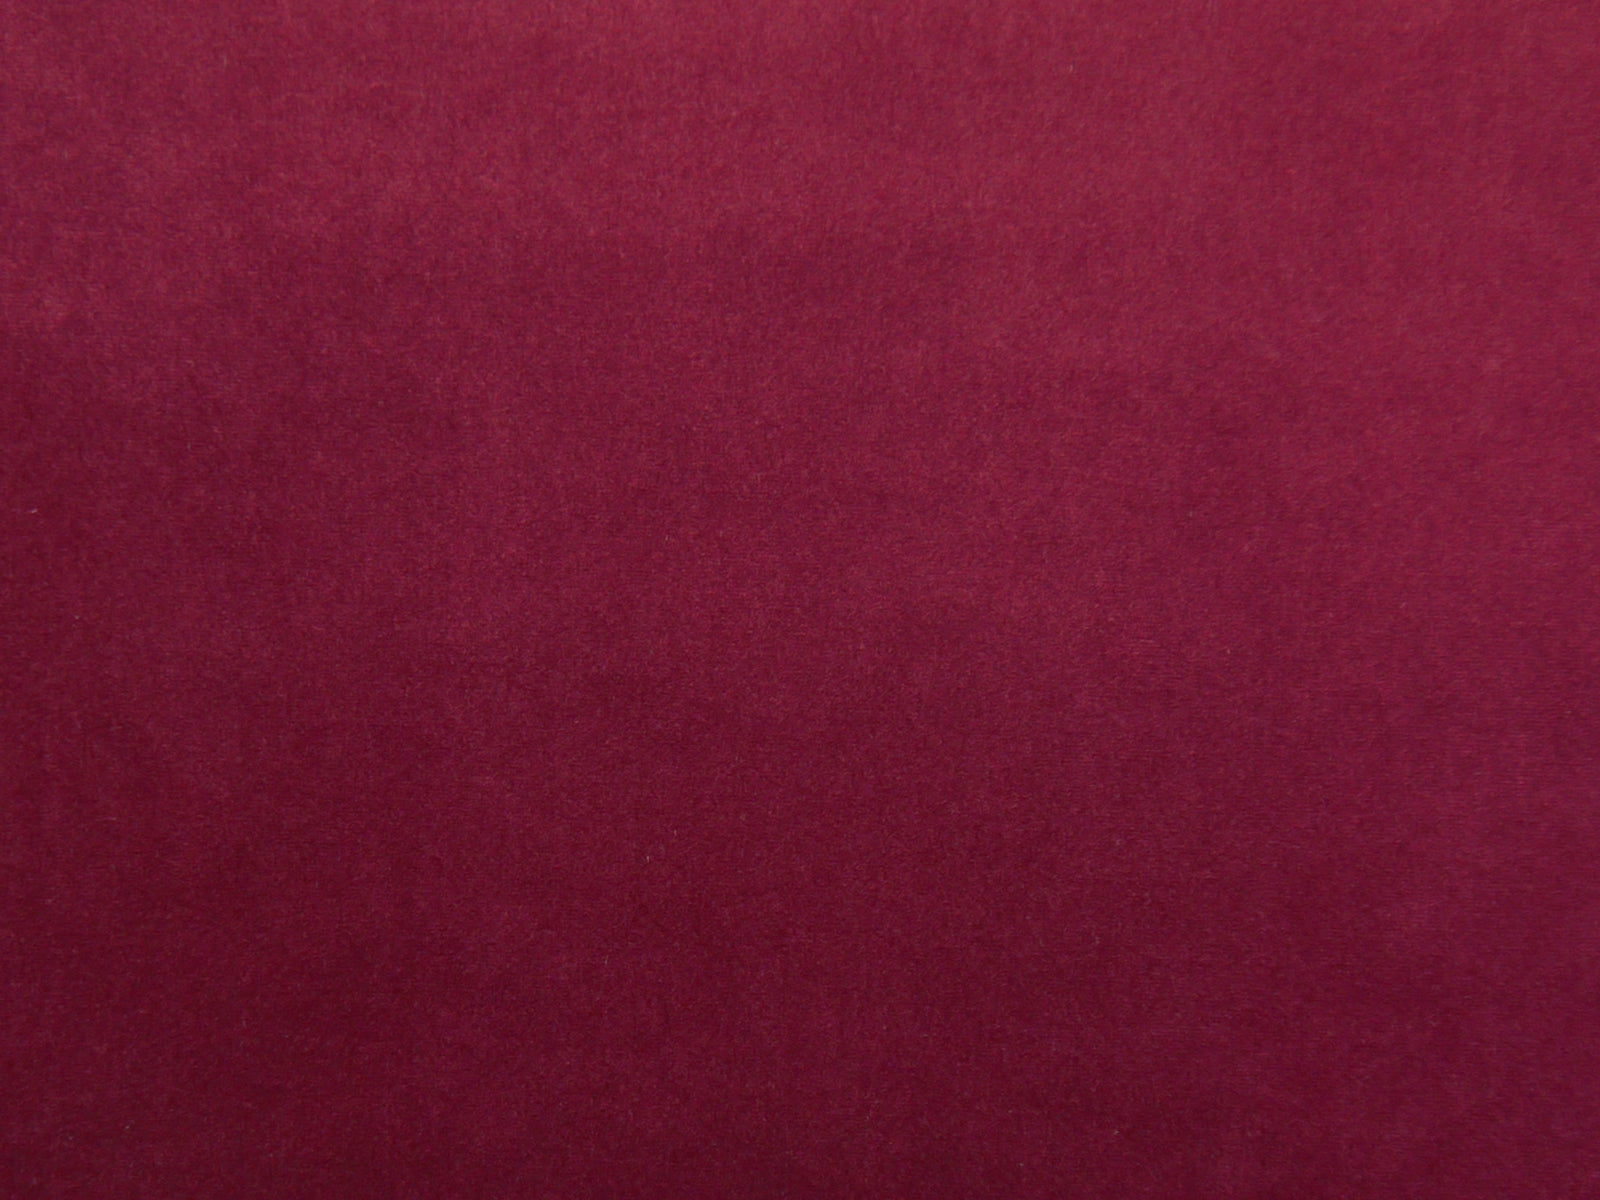 Cambio Fabric Samples - Rydan Interiors